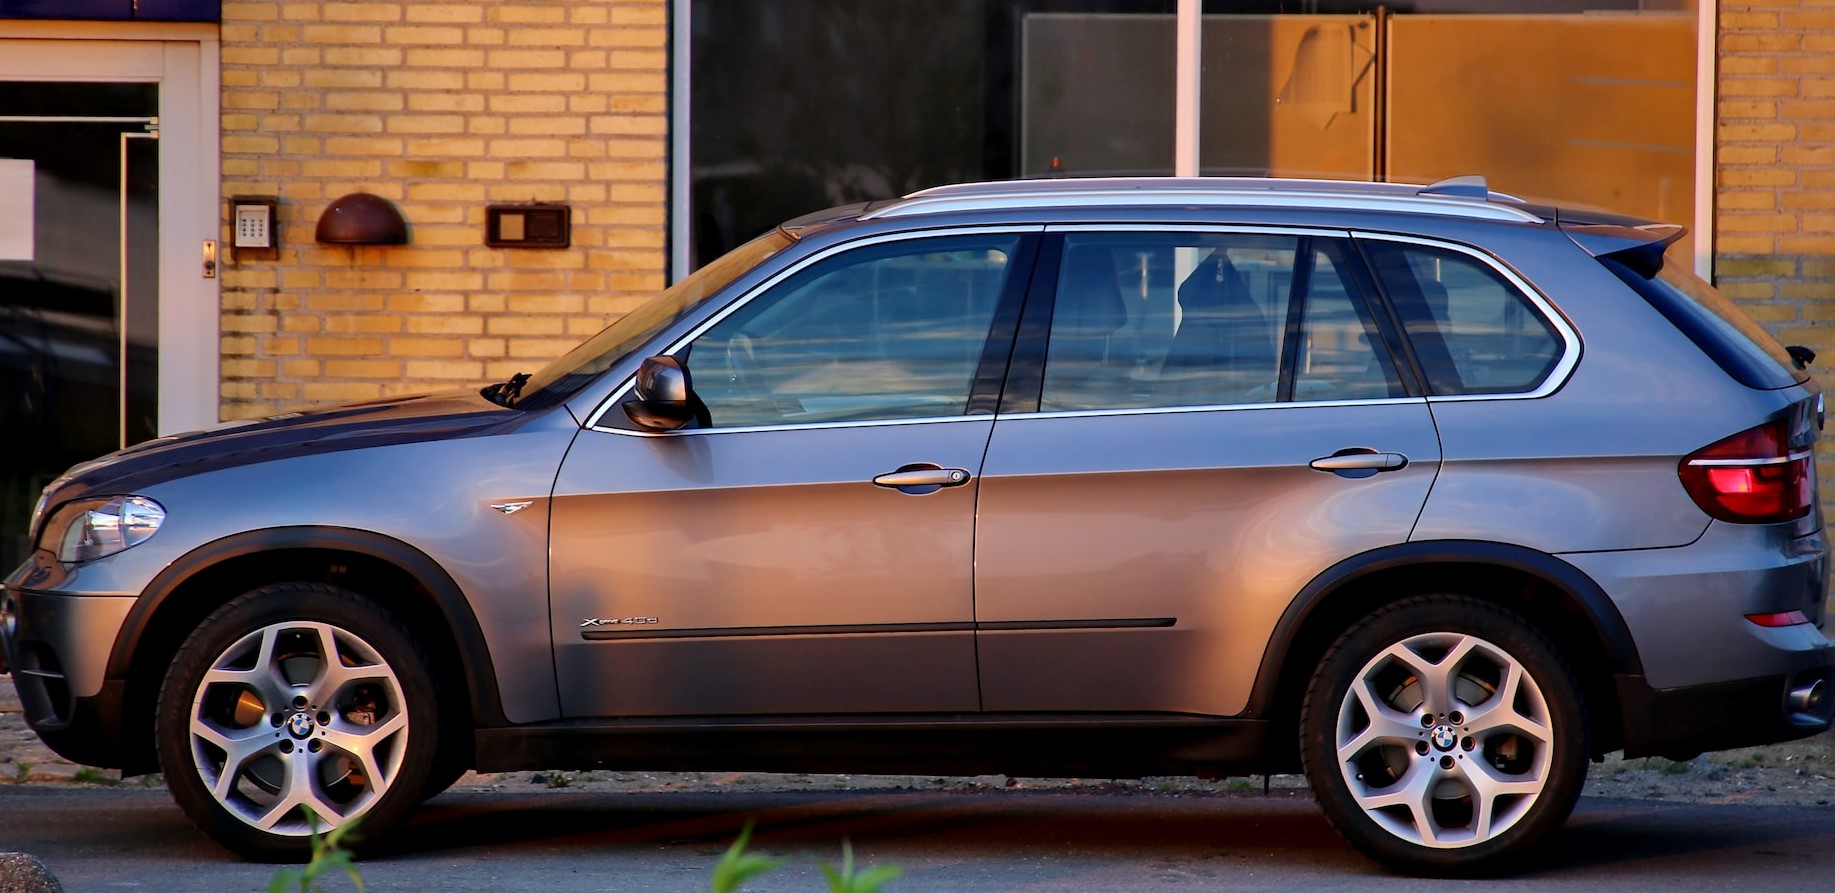 A grey BMW X5 | Kids Car Donations